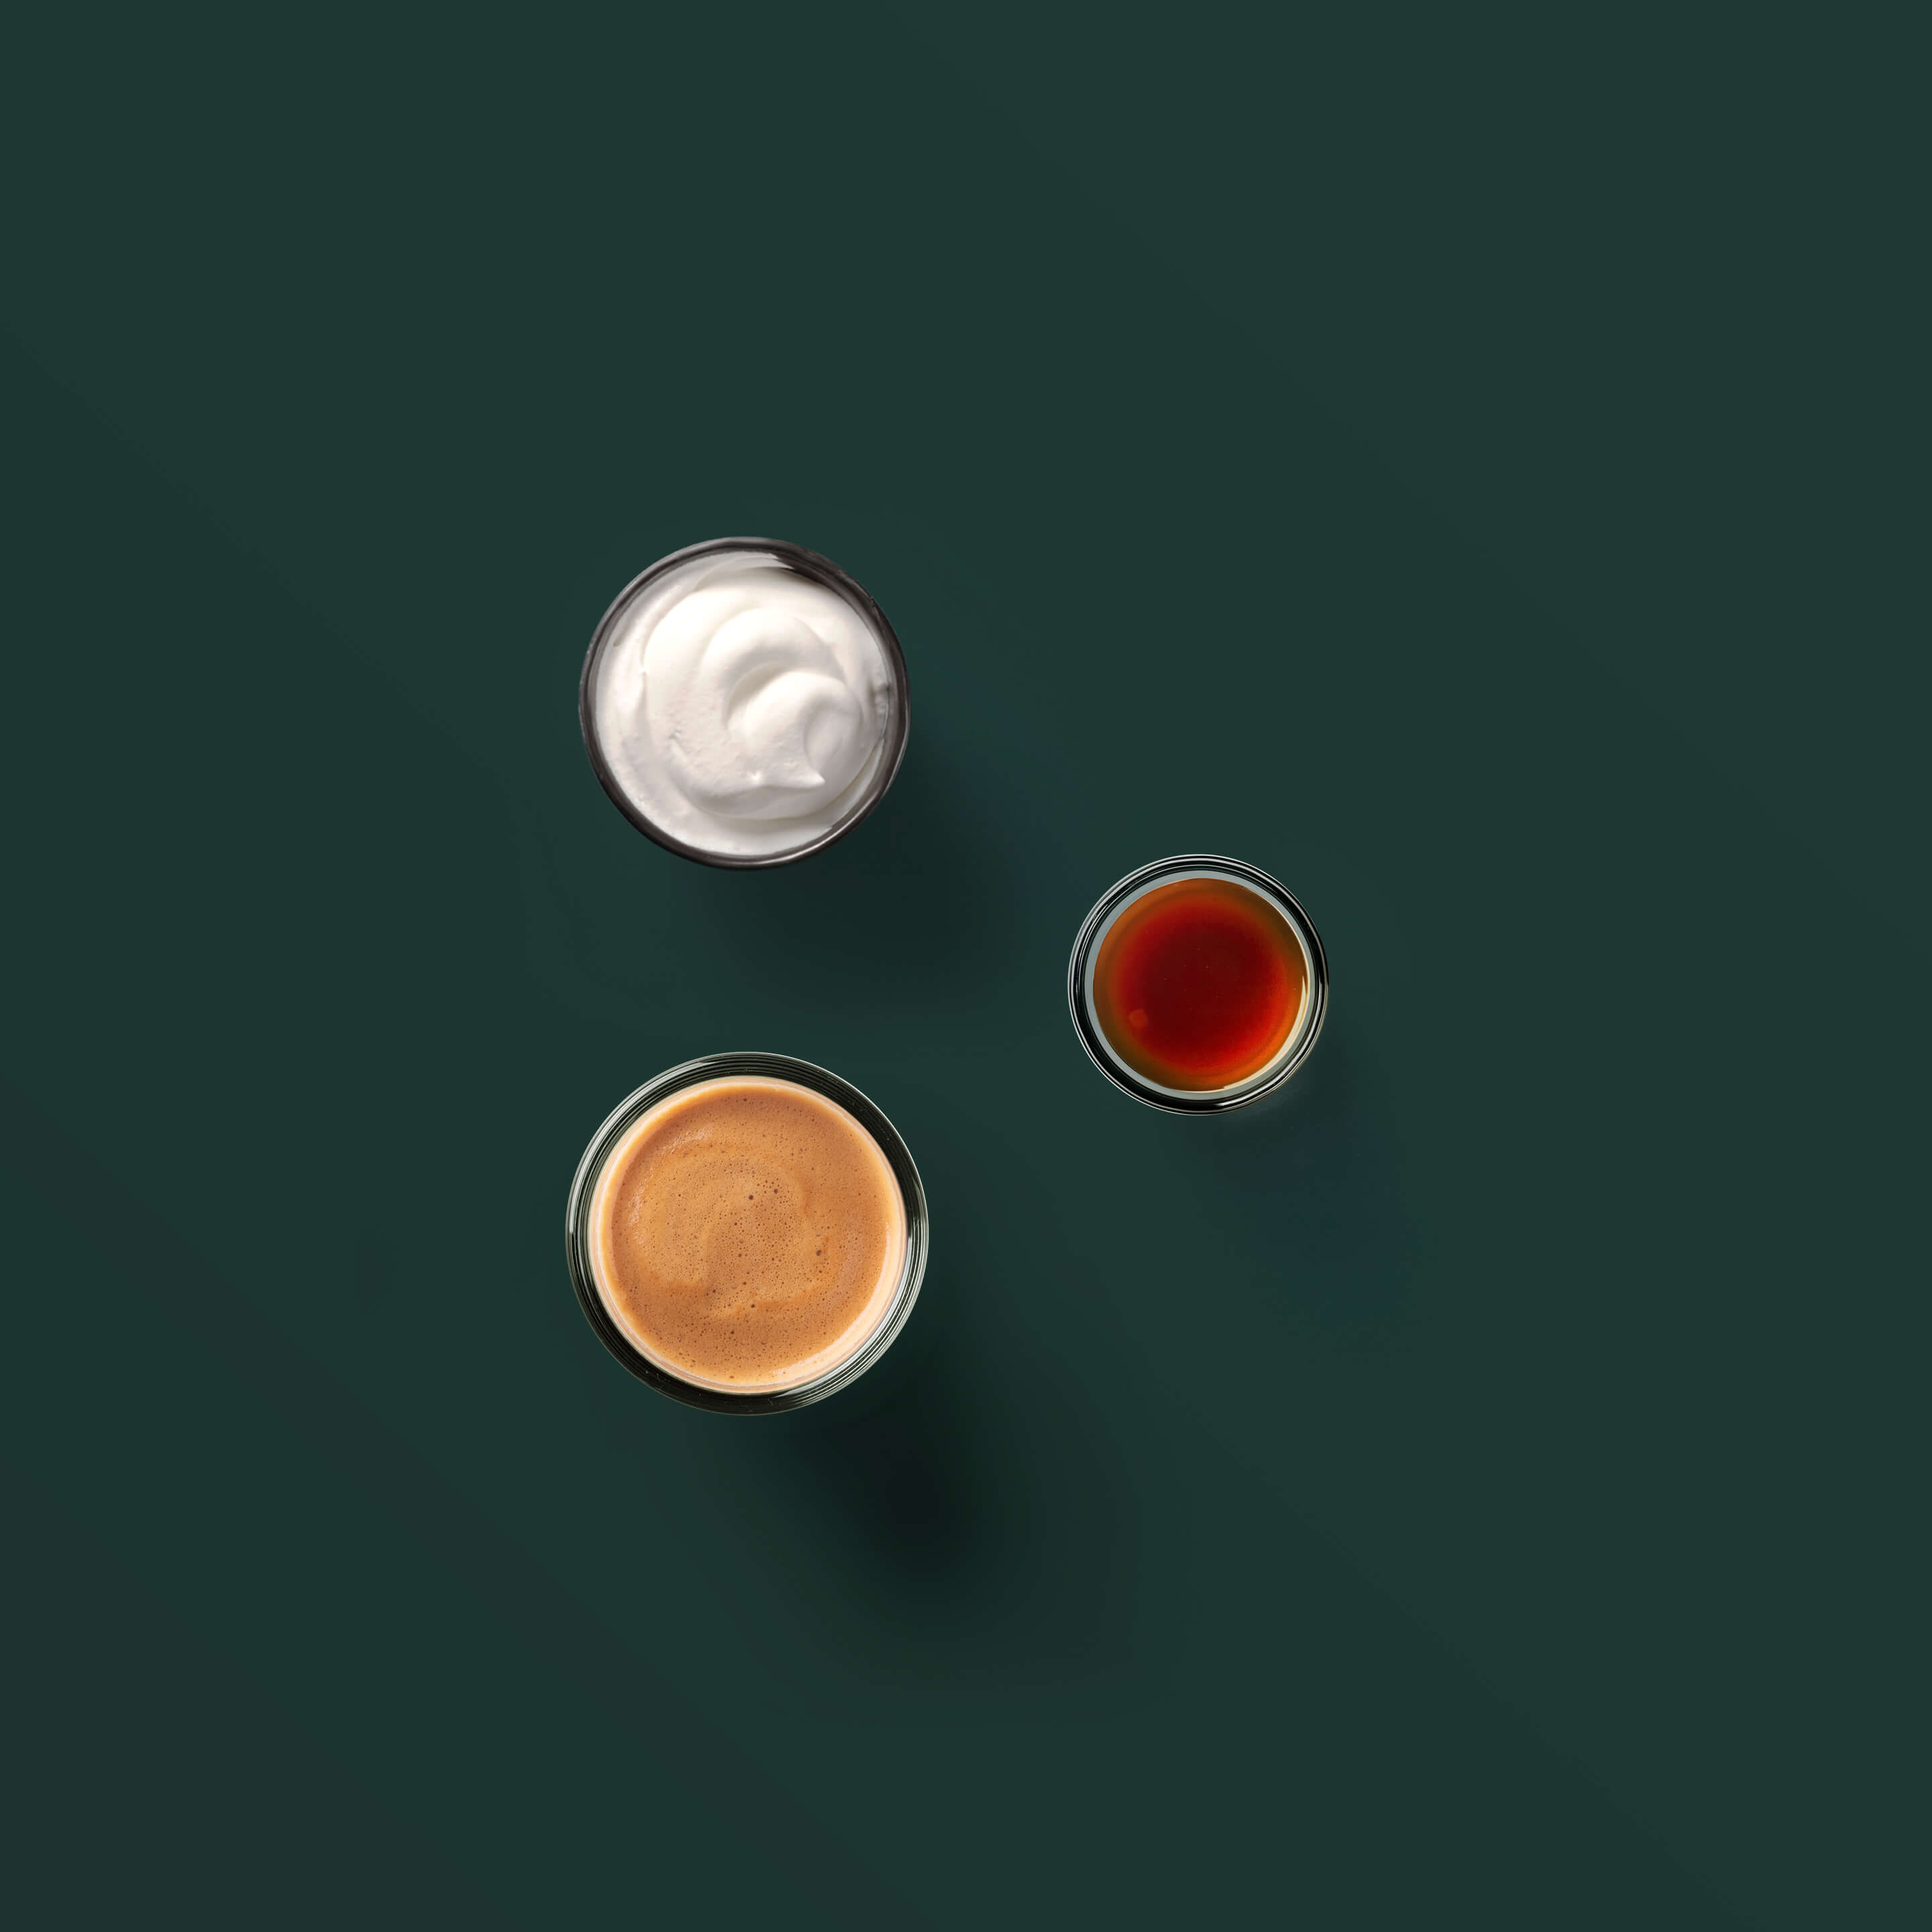 Ingredient List: Espresso, Whipped Cream, Caramel